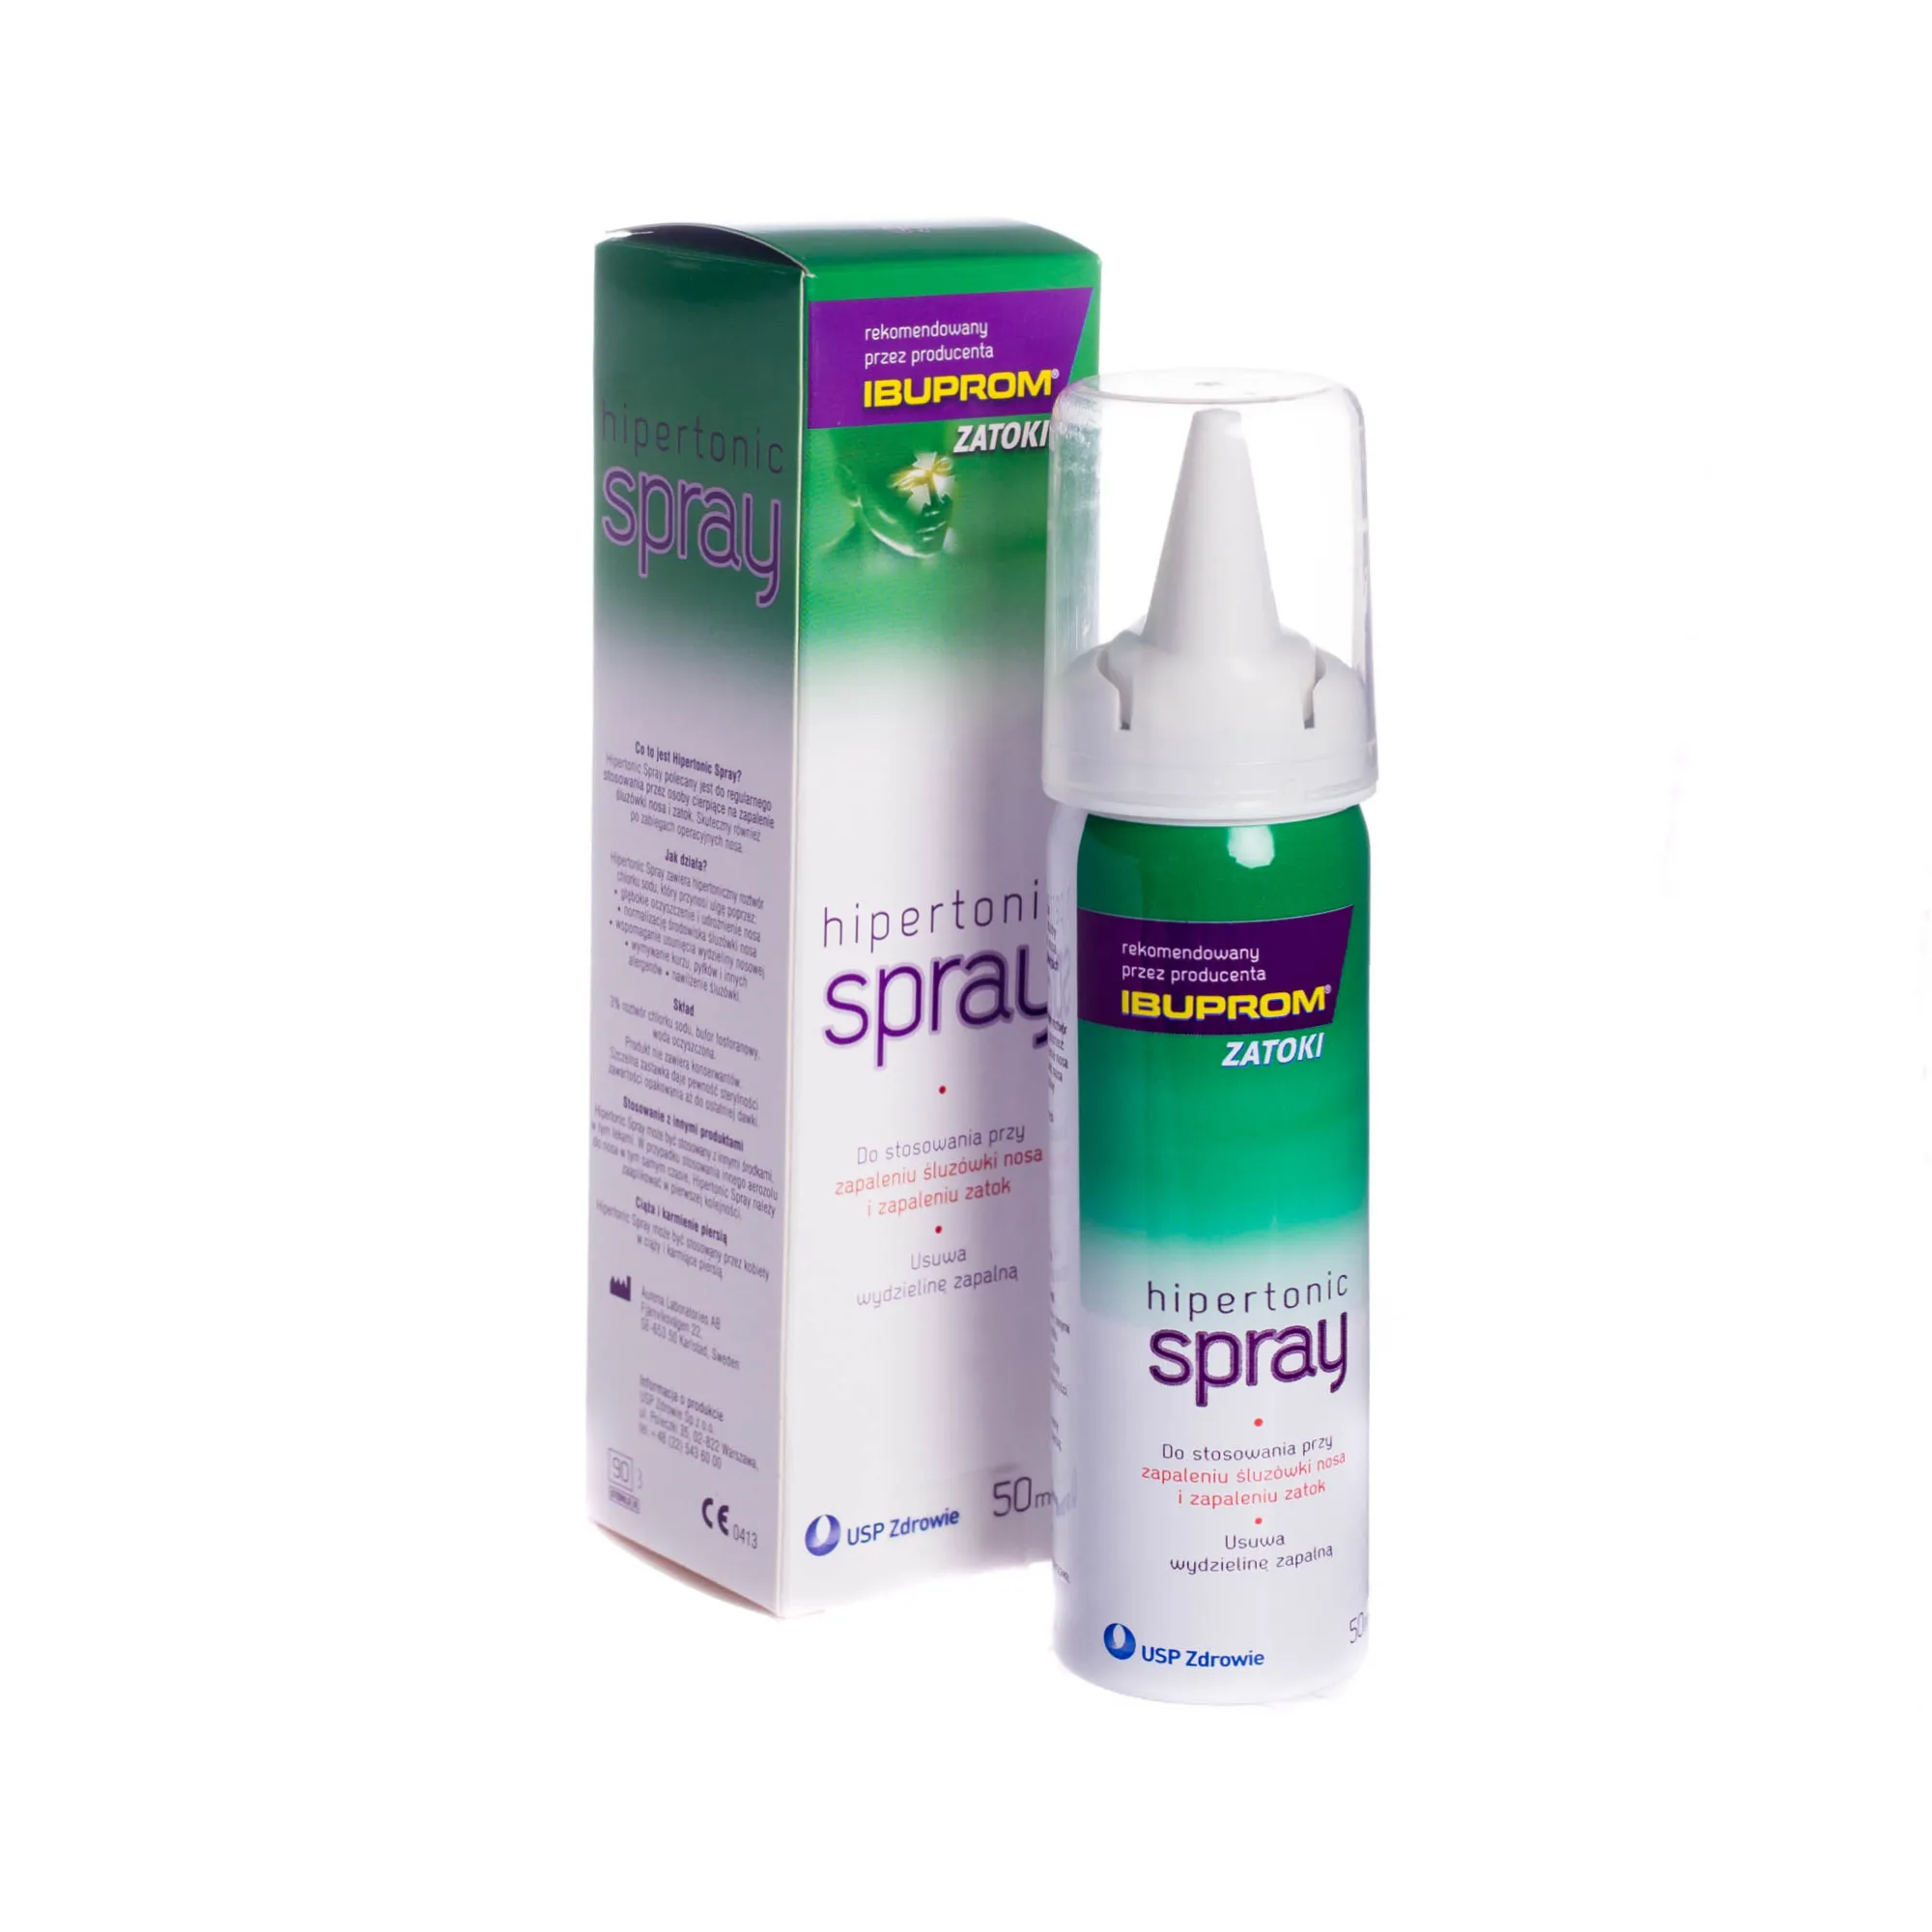 Hipertonic Spray, spray do nosa, 50 ml